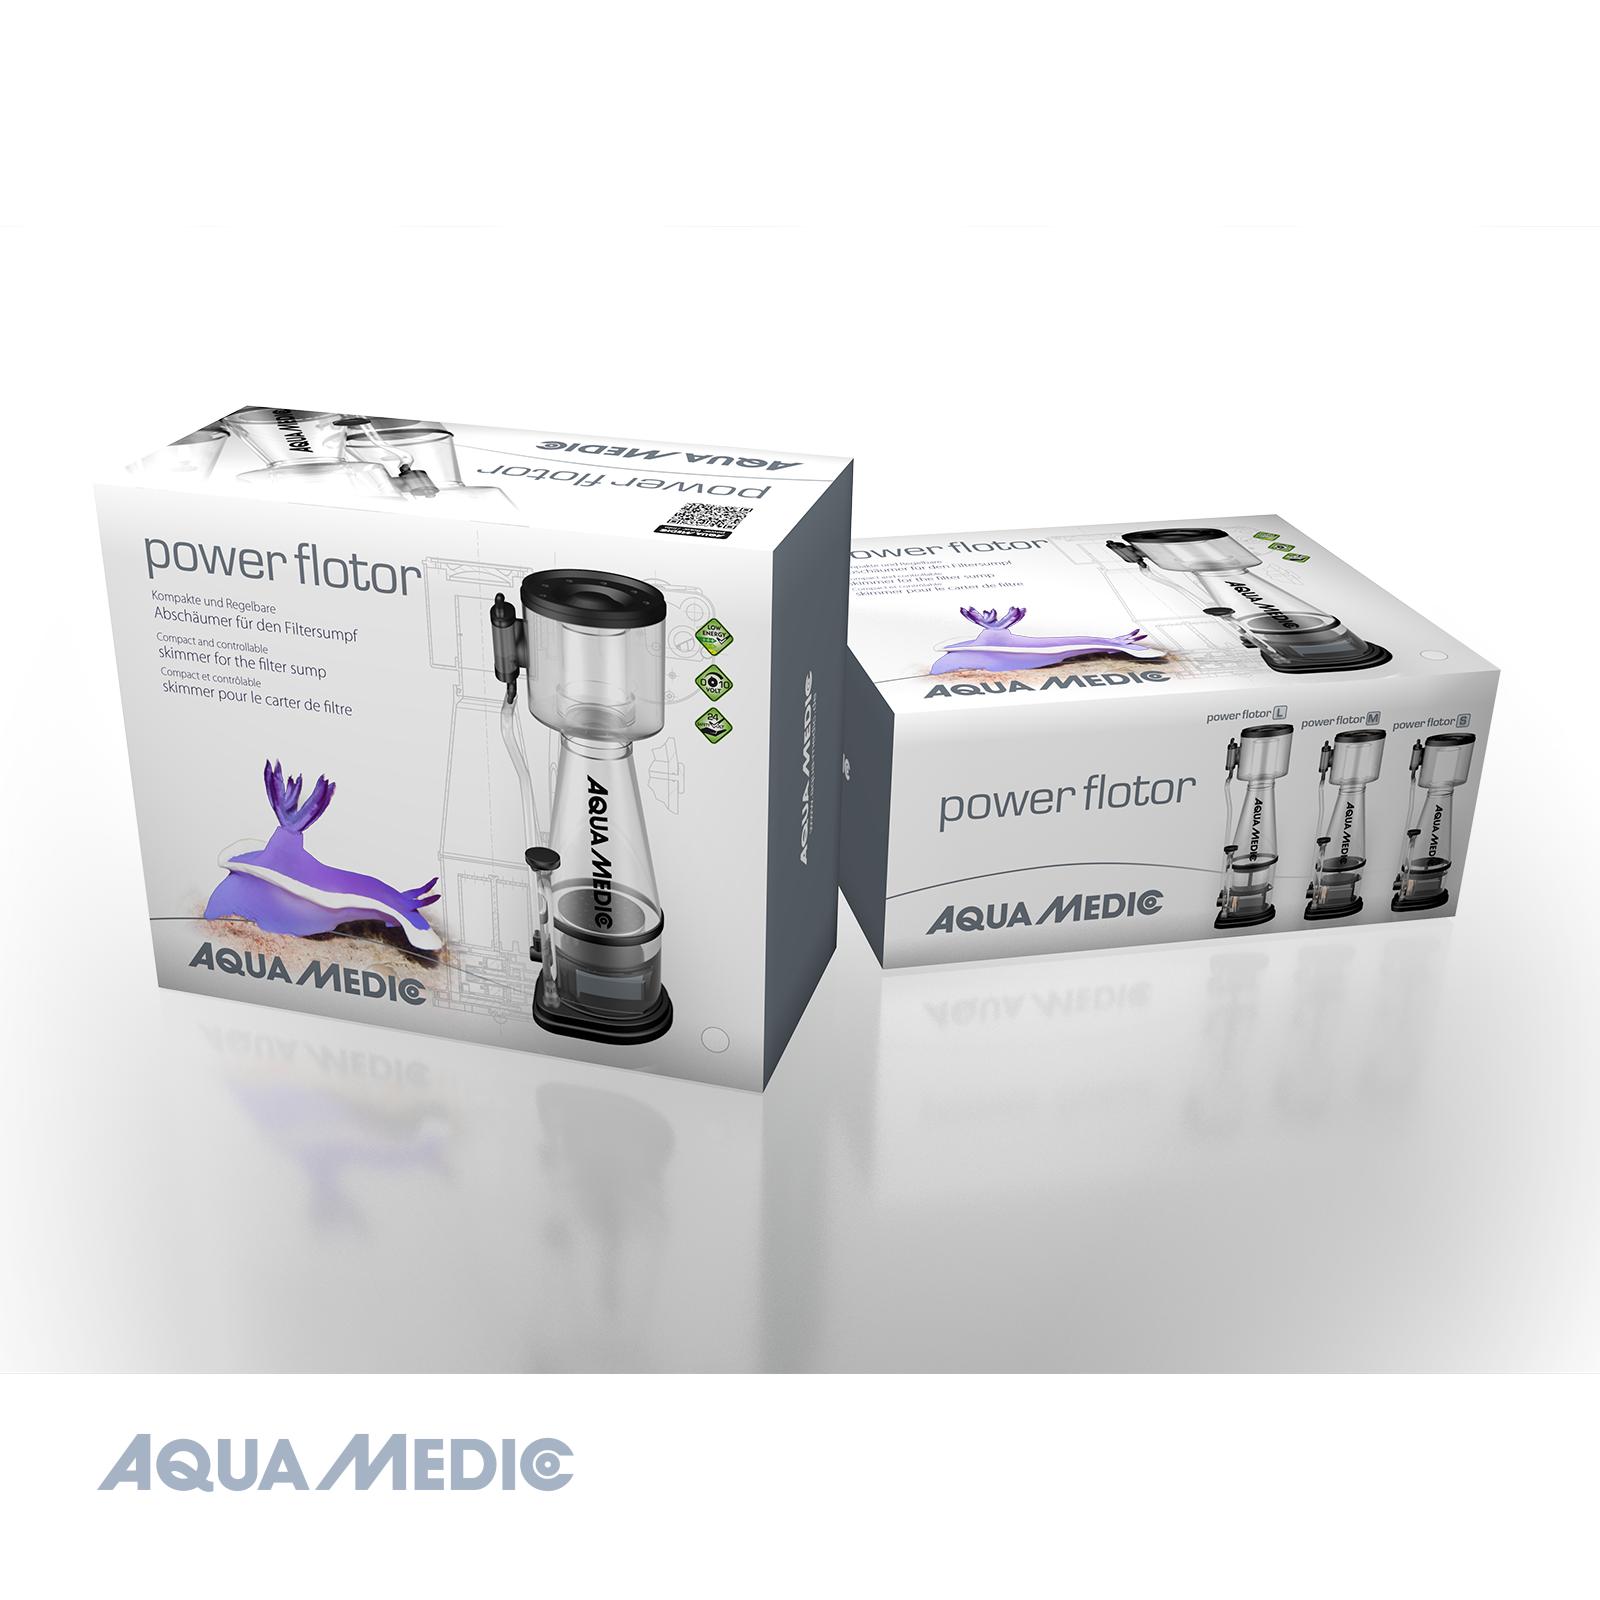 Aqua Medic power flotor skimmers